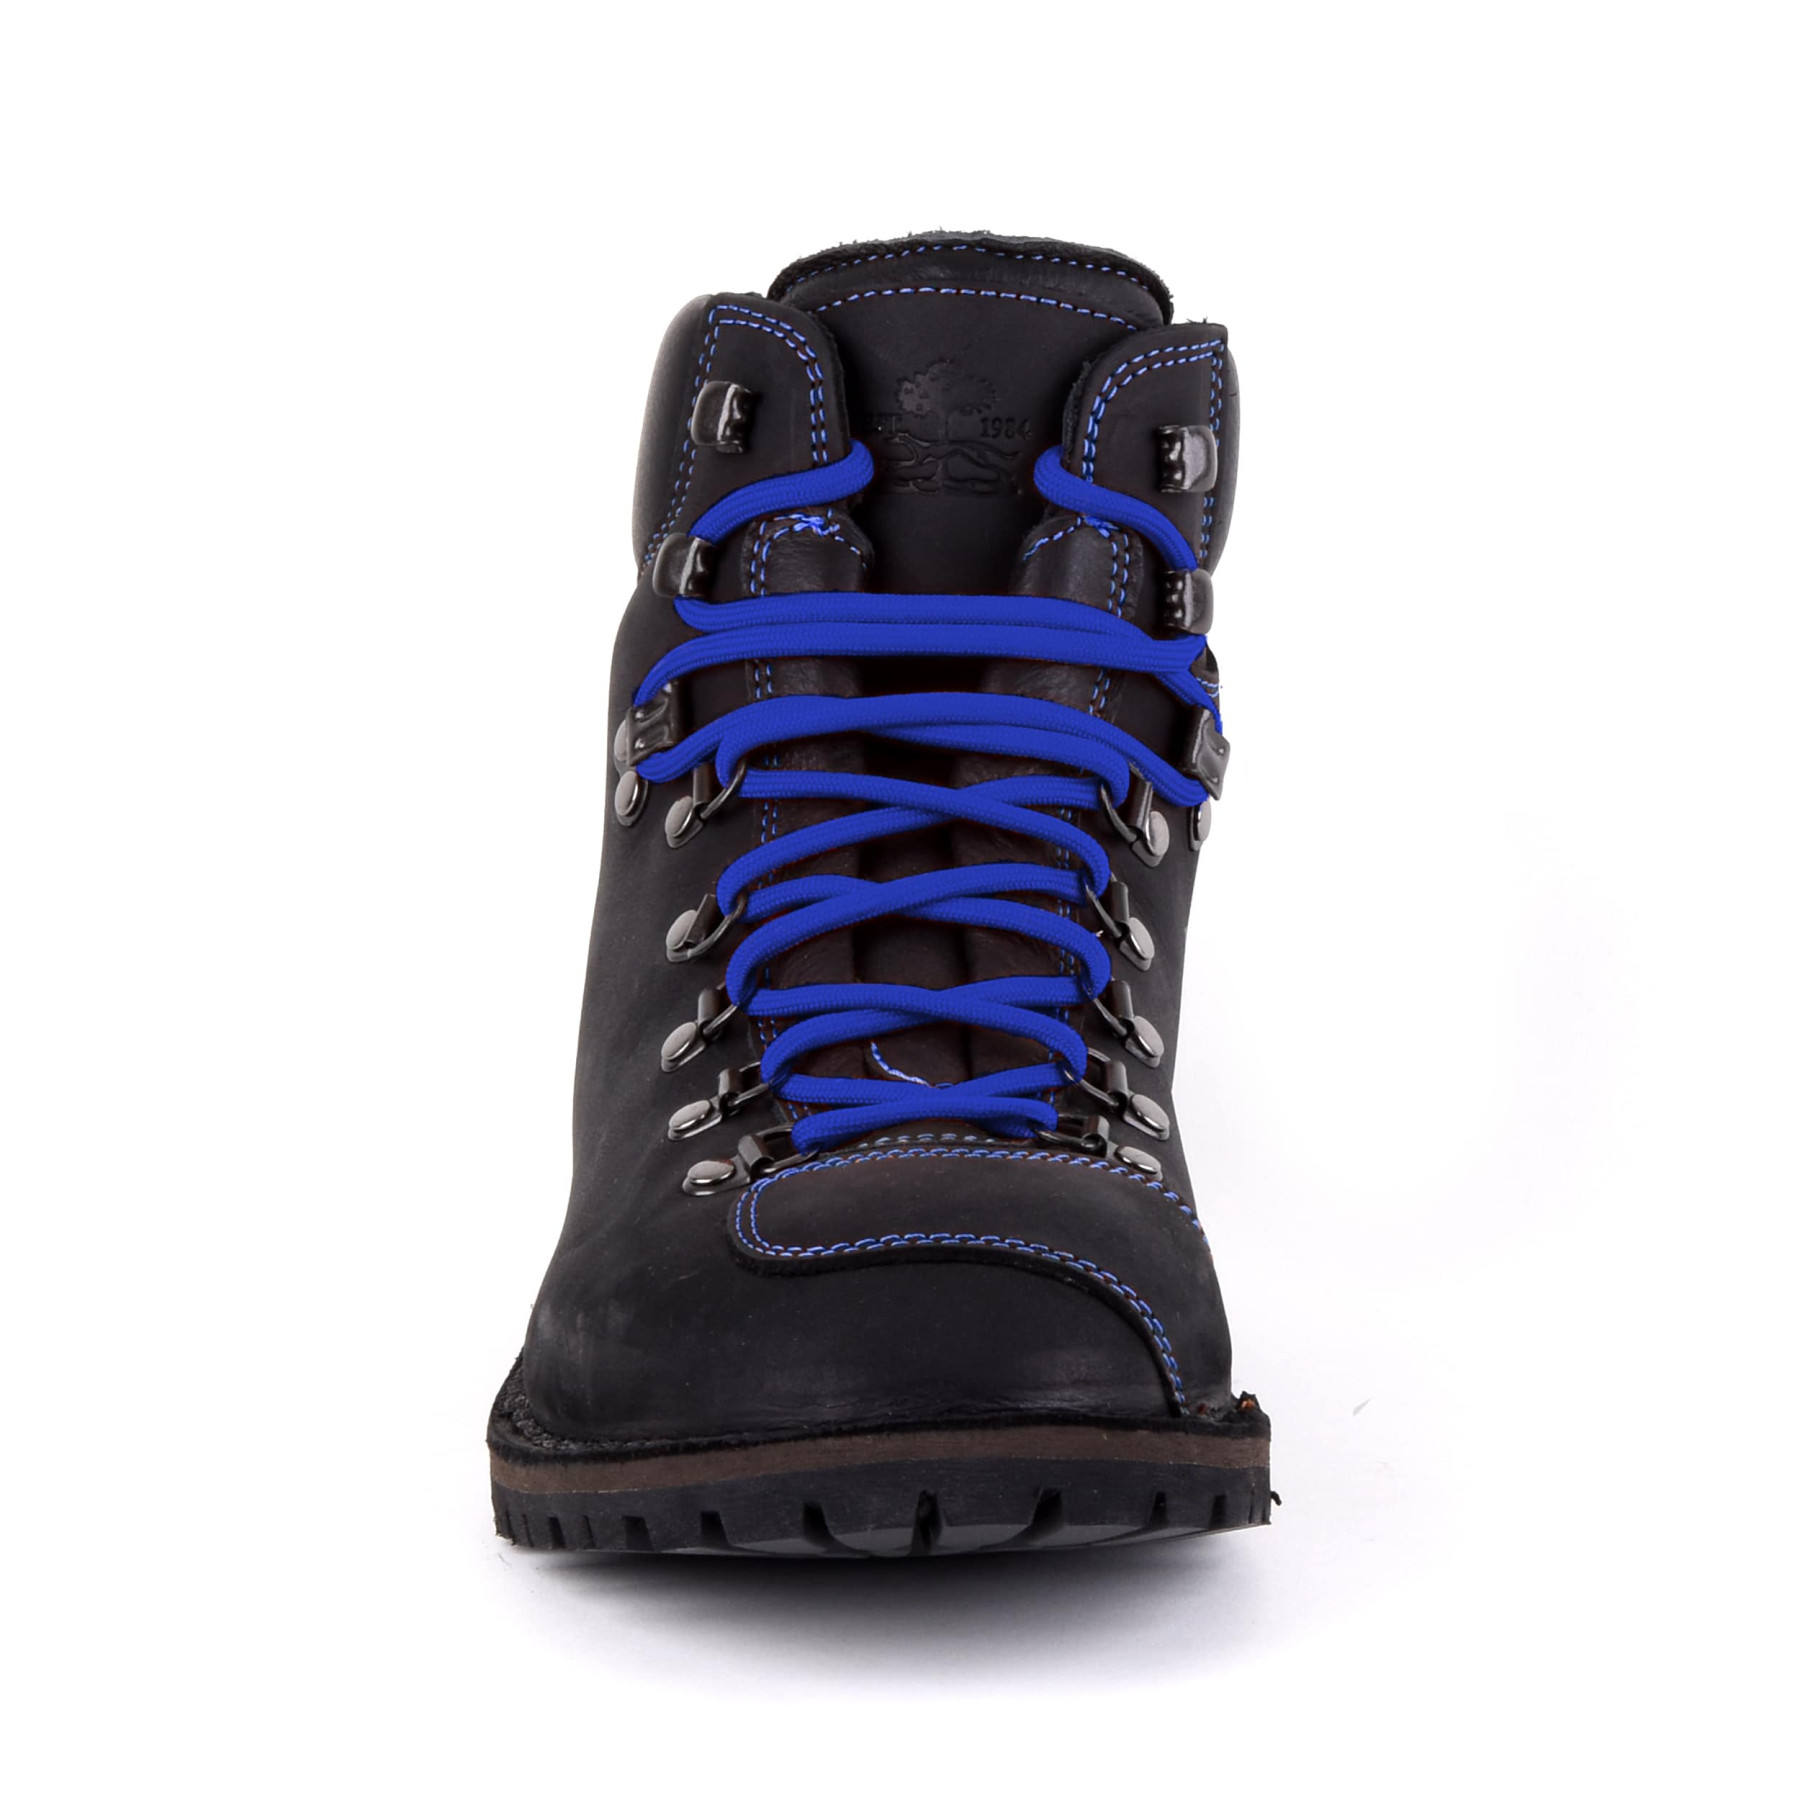 Biker Boot Adventure Denver Black, black gents boot, blue stitching